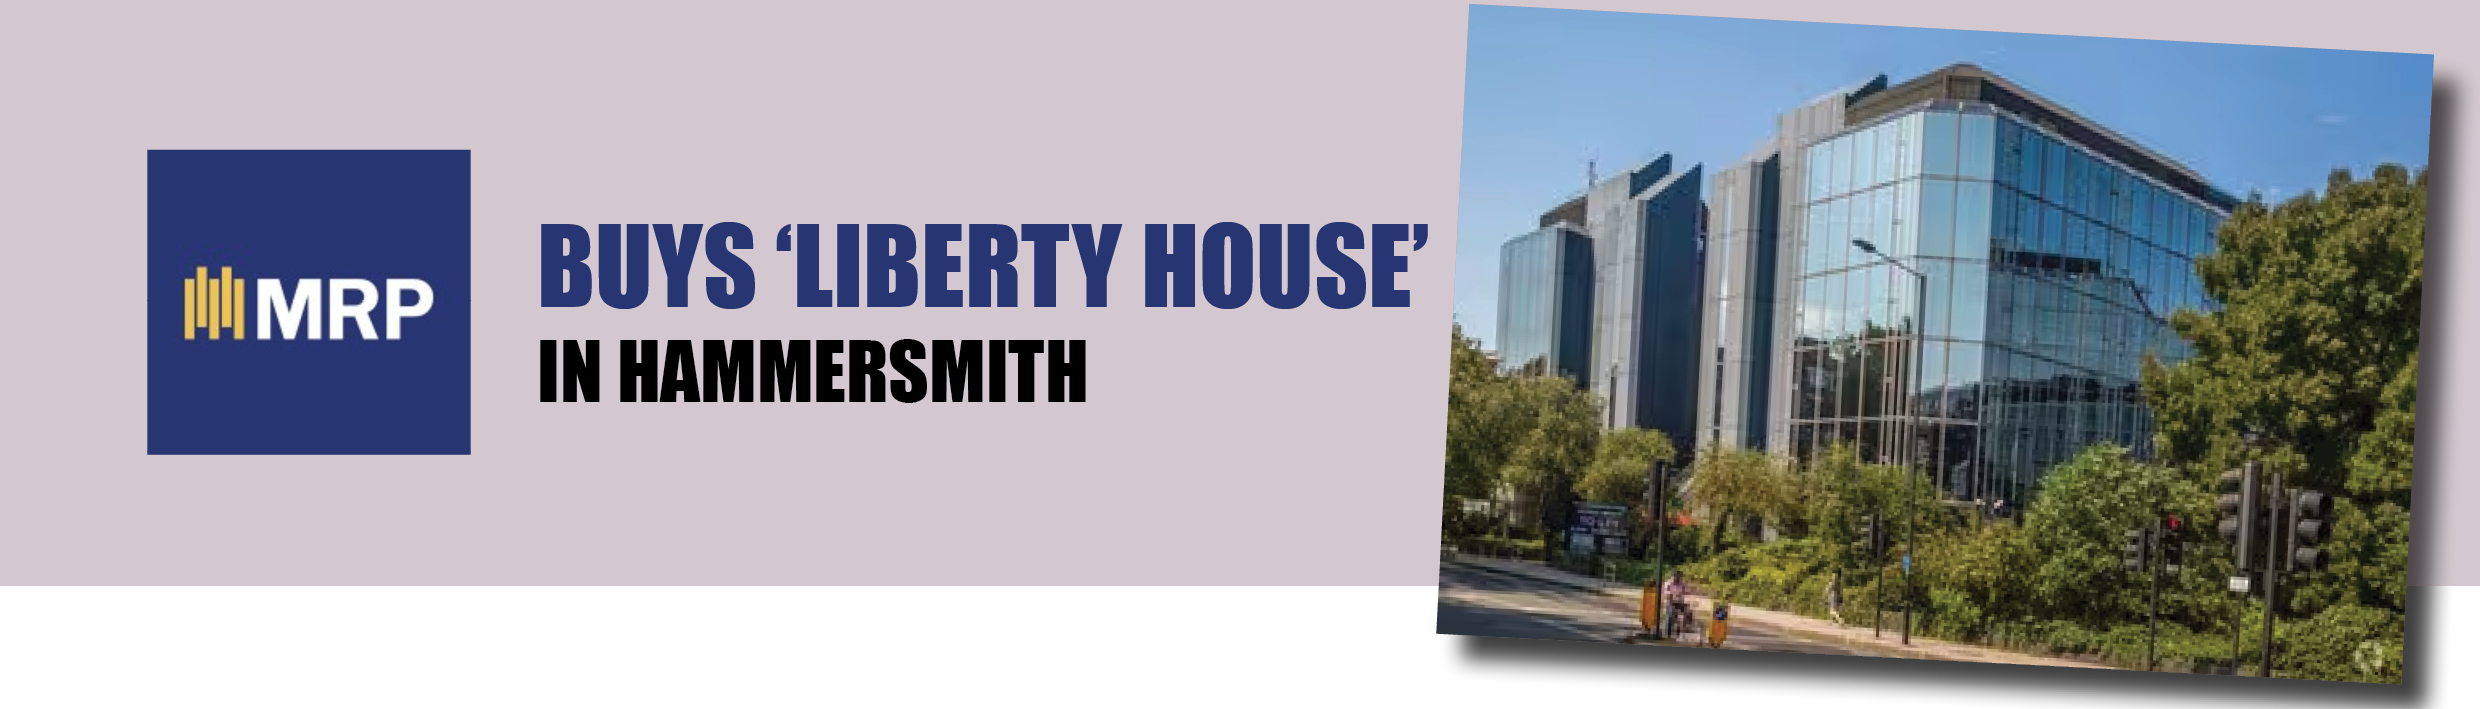 MRP buys liberty house